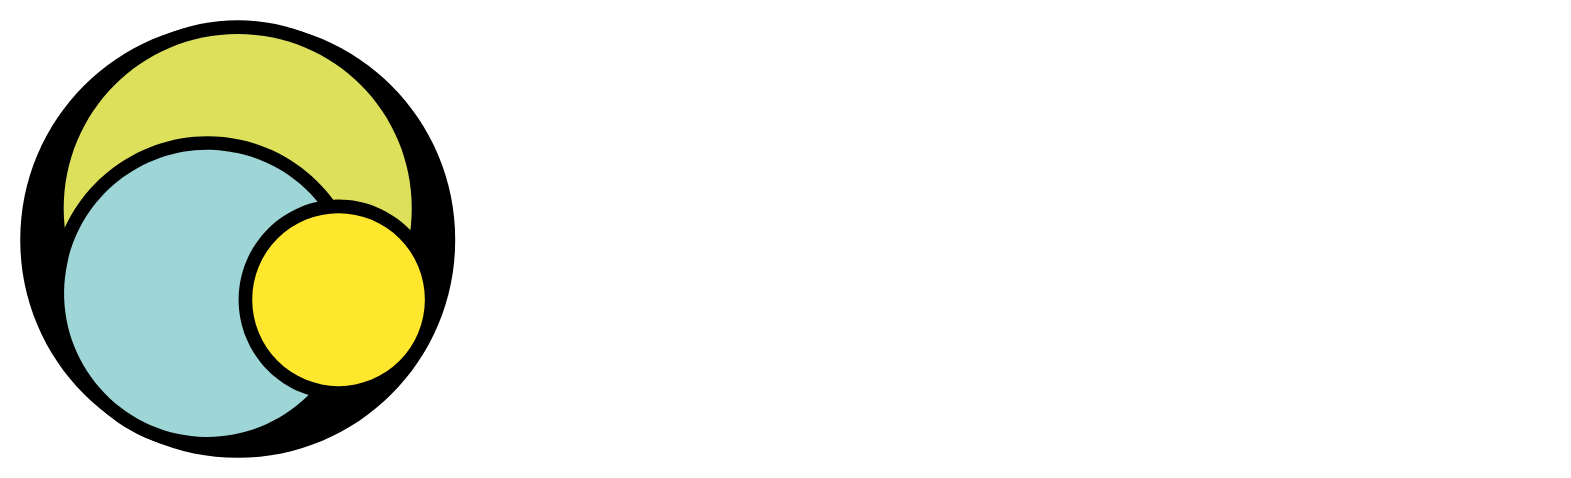 PagSeguro logo large for dark backgrounds (transparent PNG)